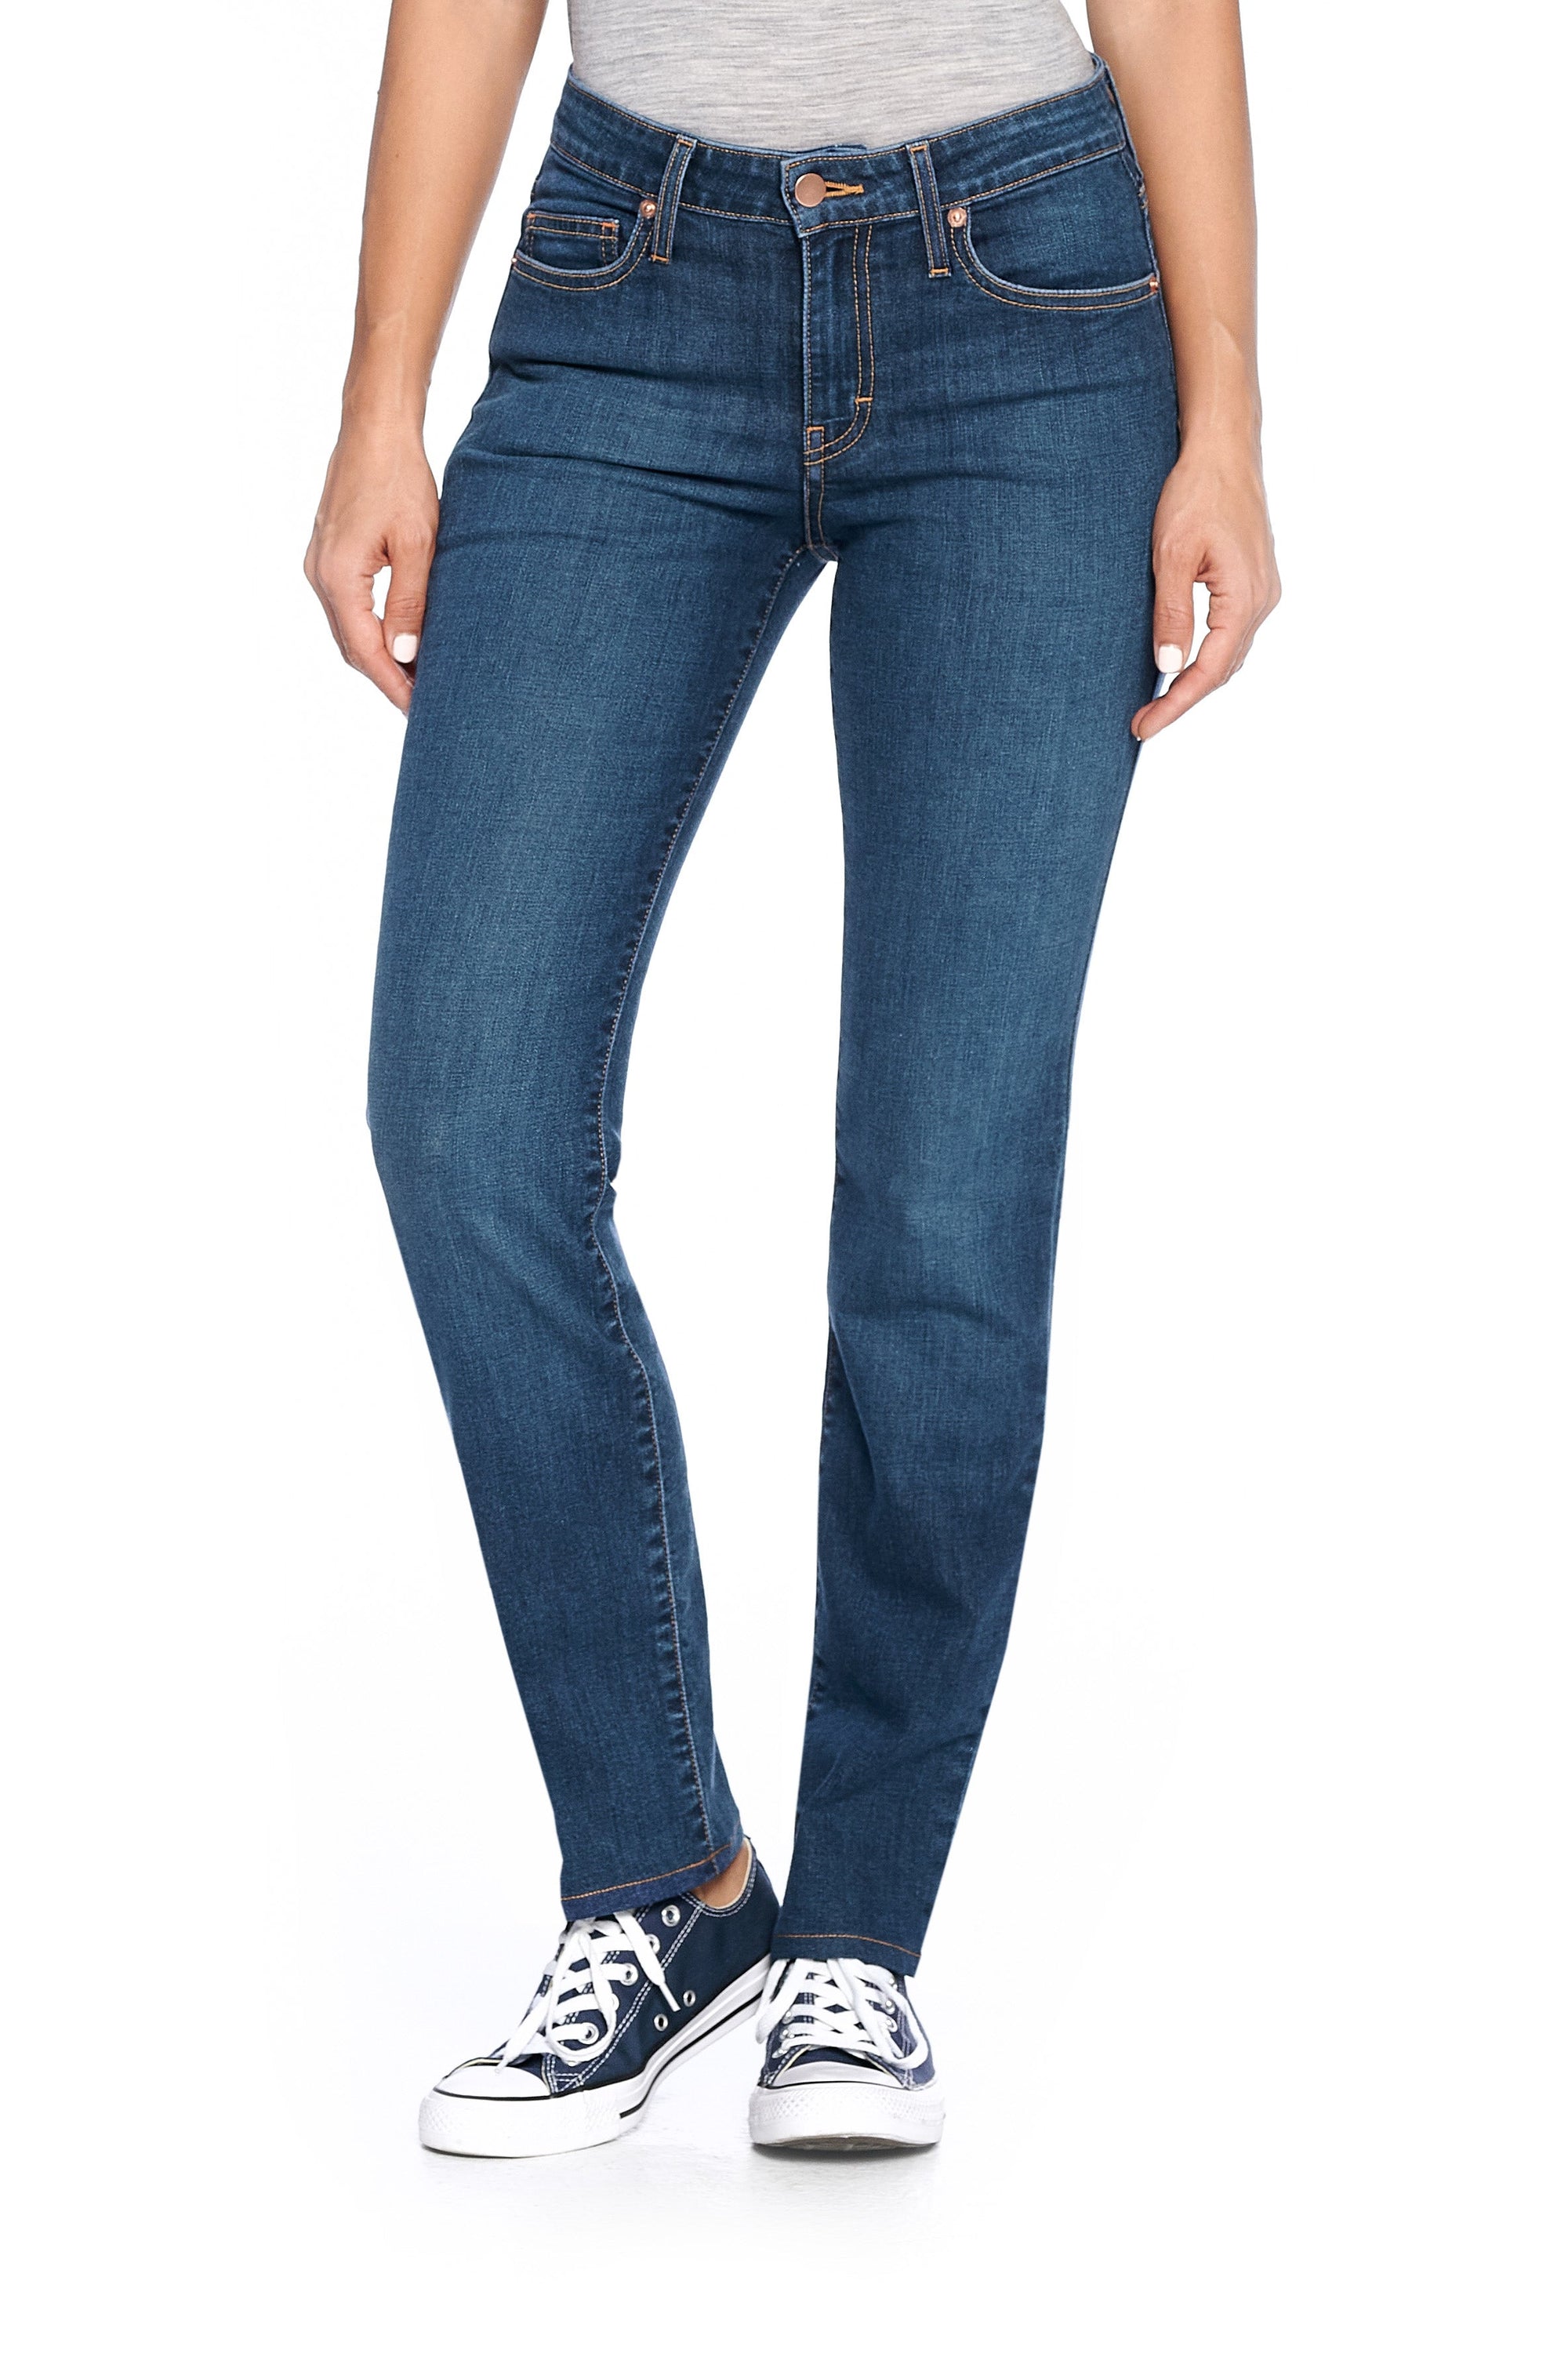 The fly slim vintage indigo travel jeans for women.